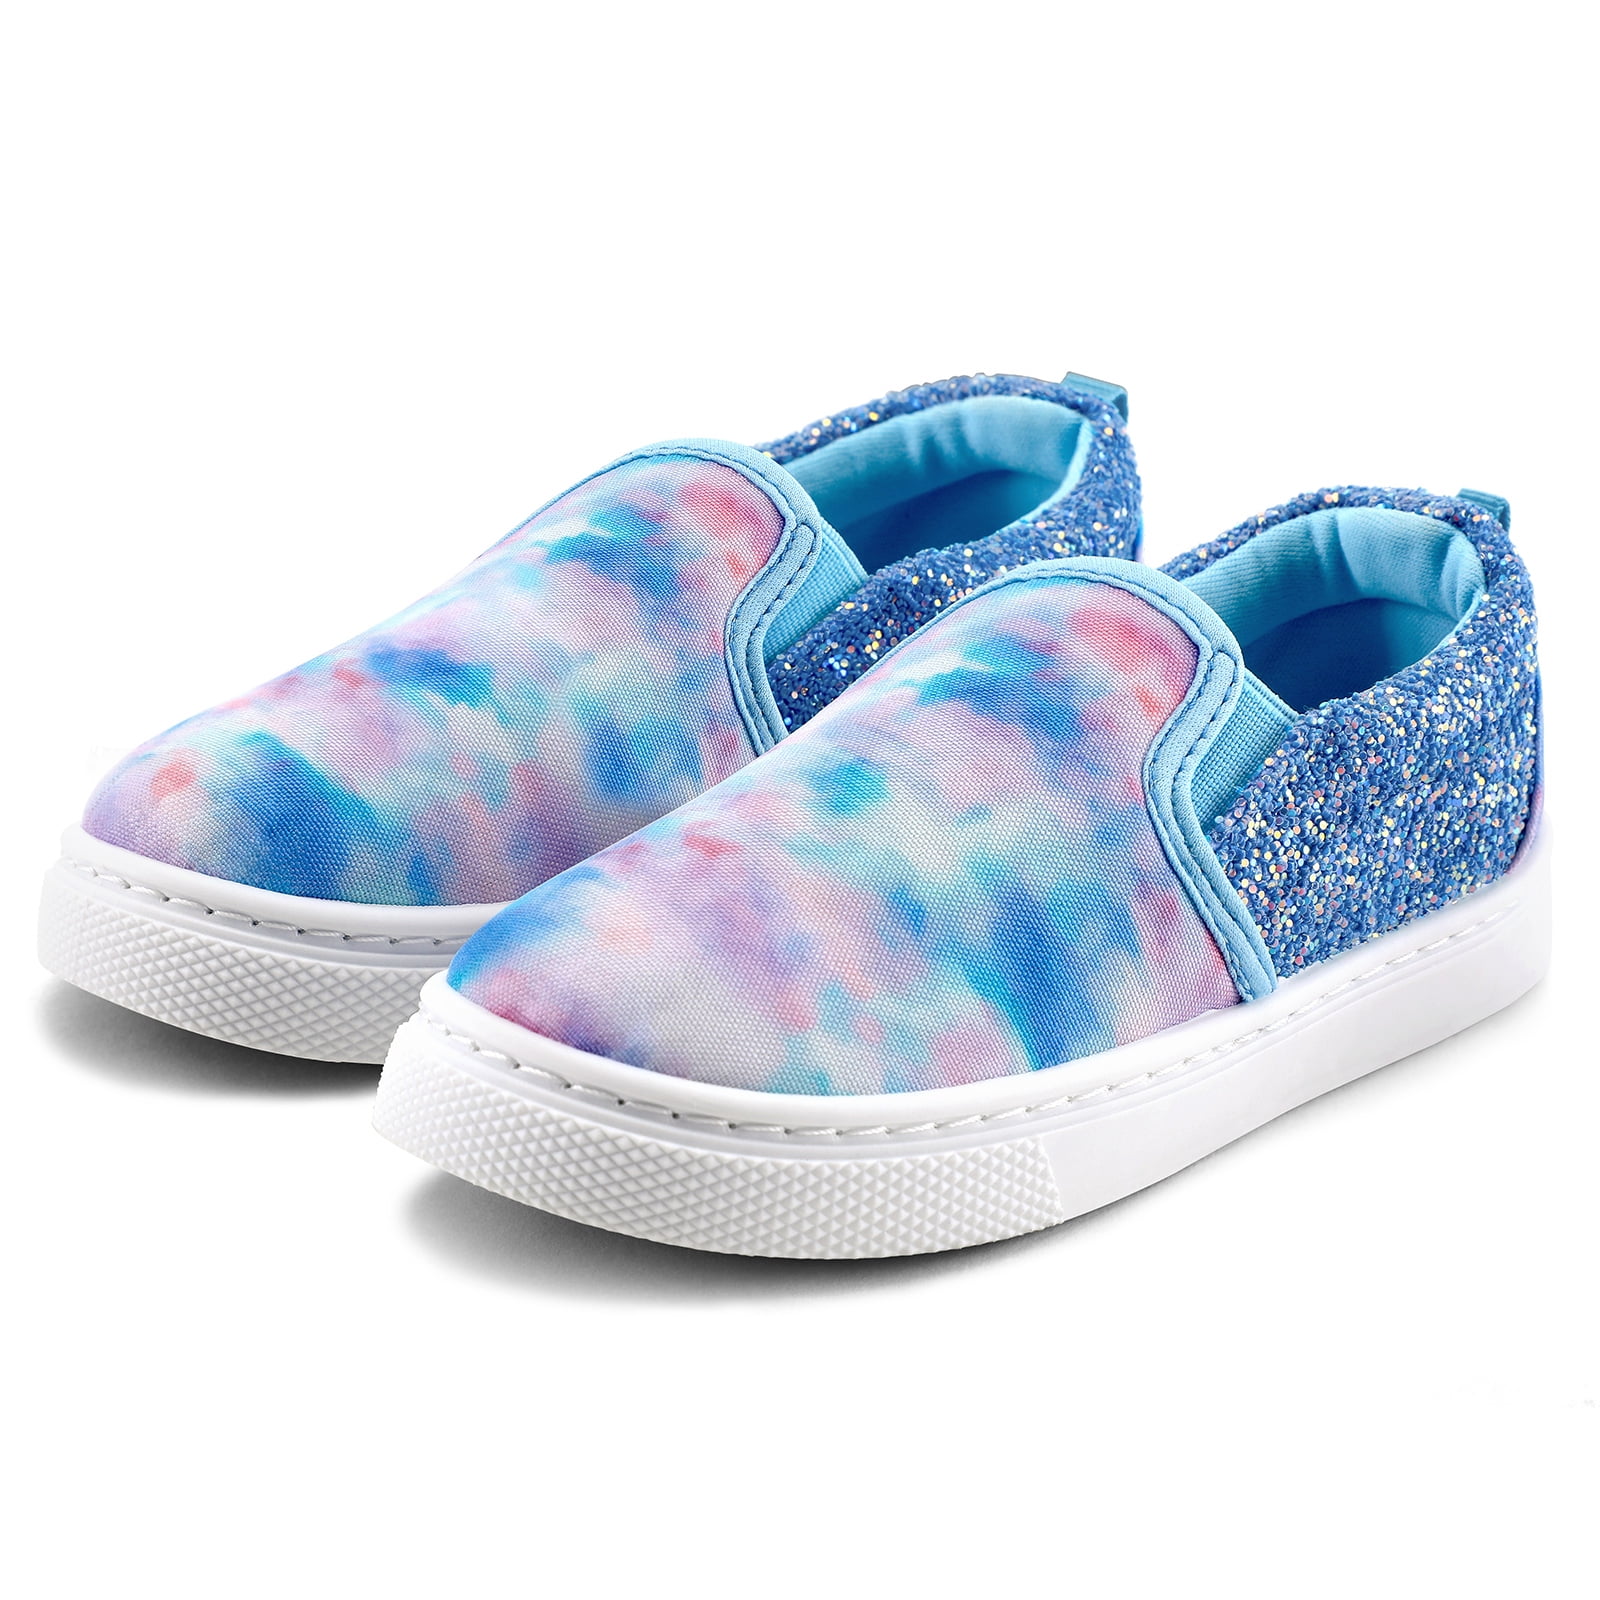 Bocca Girls Blue Slip on Sneakers Kids Canvas Walking Shoes Size 2 ...